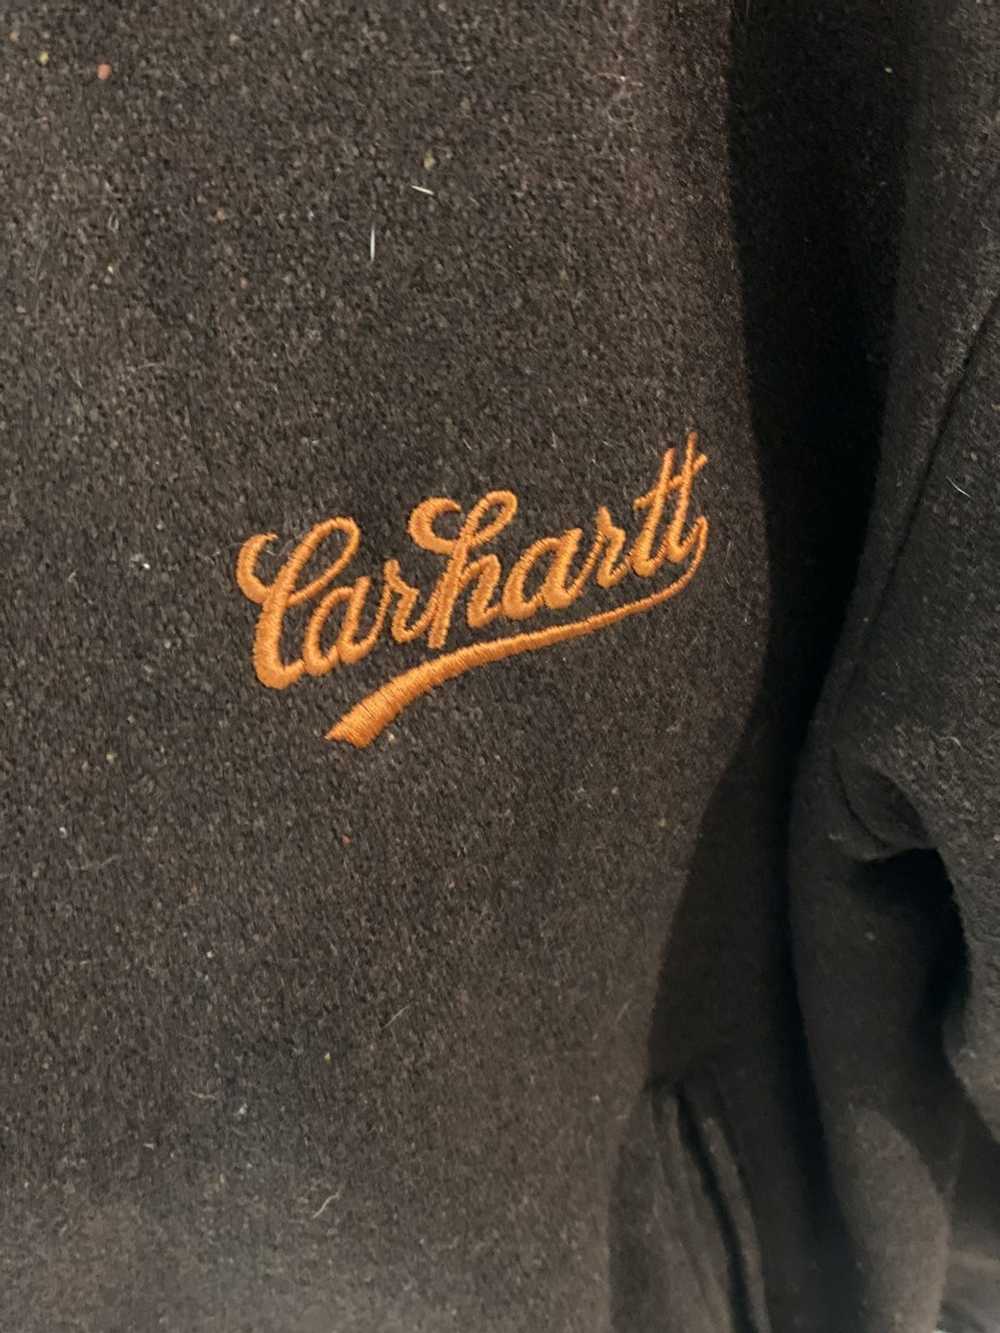 Carhartt Vintage Carhart Bomber - image 2